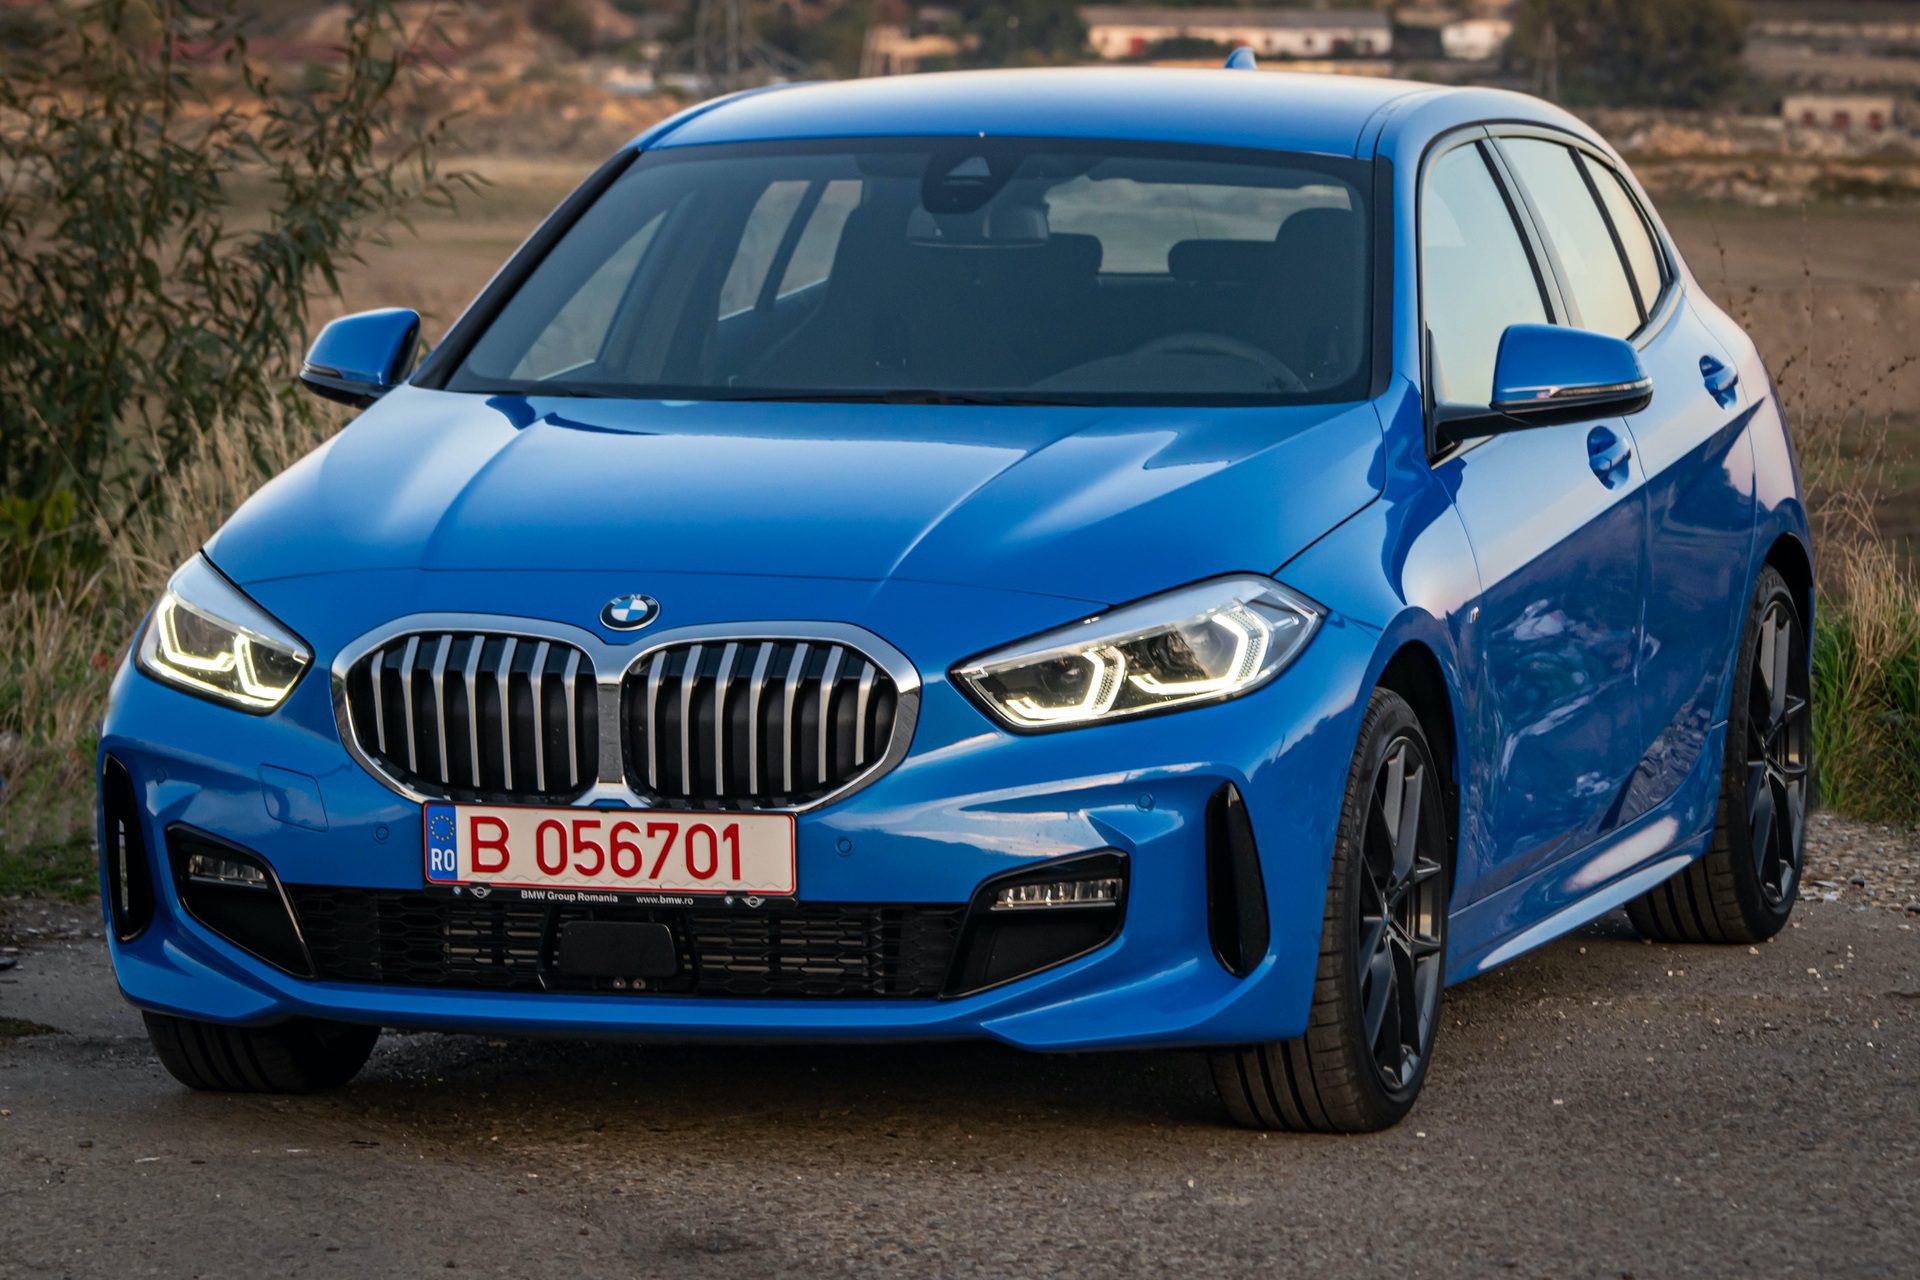 REVIEW TEST DRIVE 2019 BMW 120d xDrive Hatchback Motor